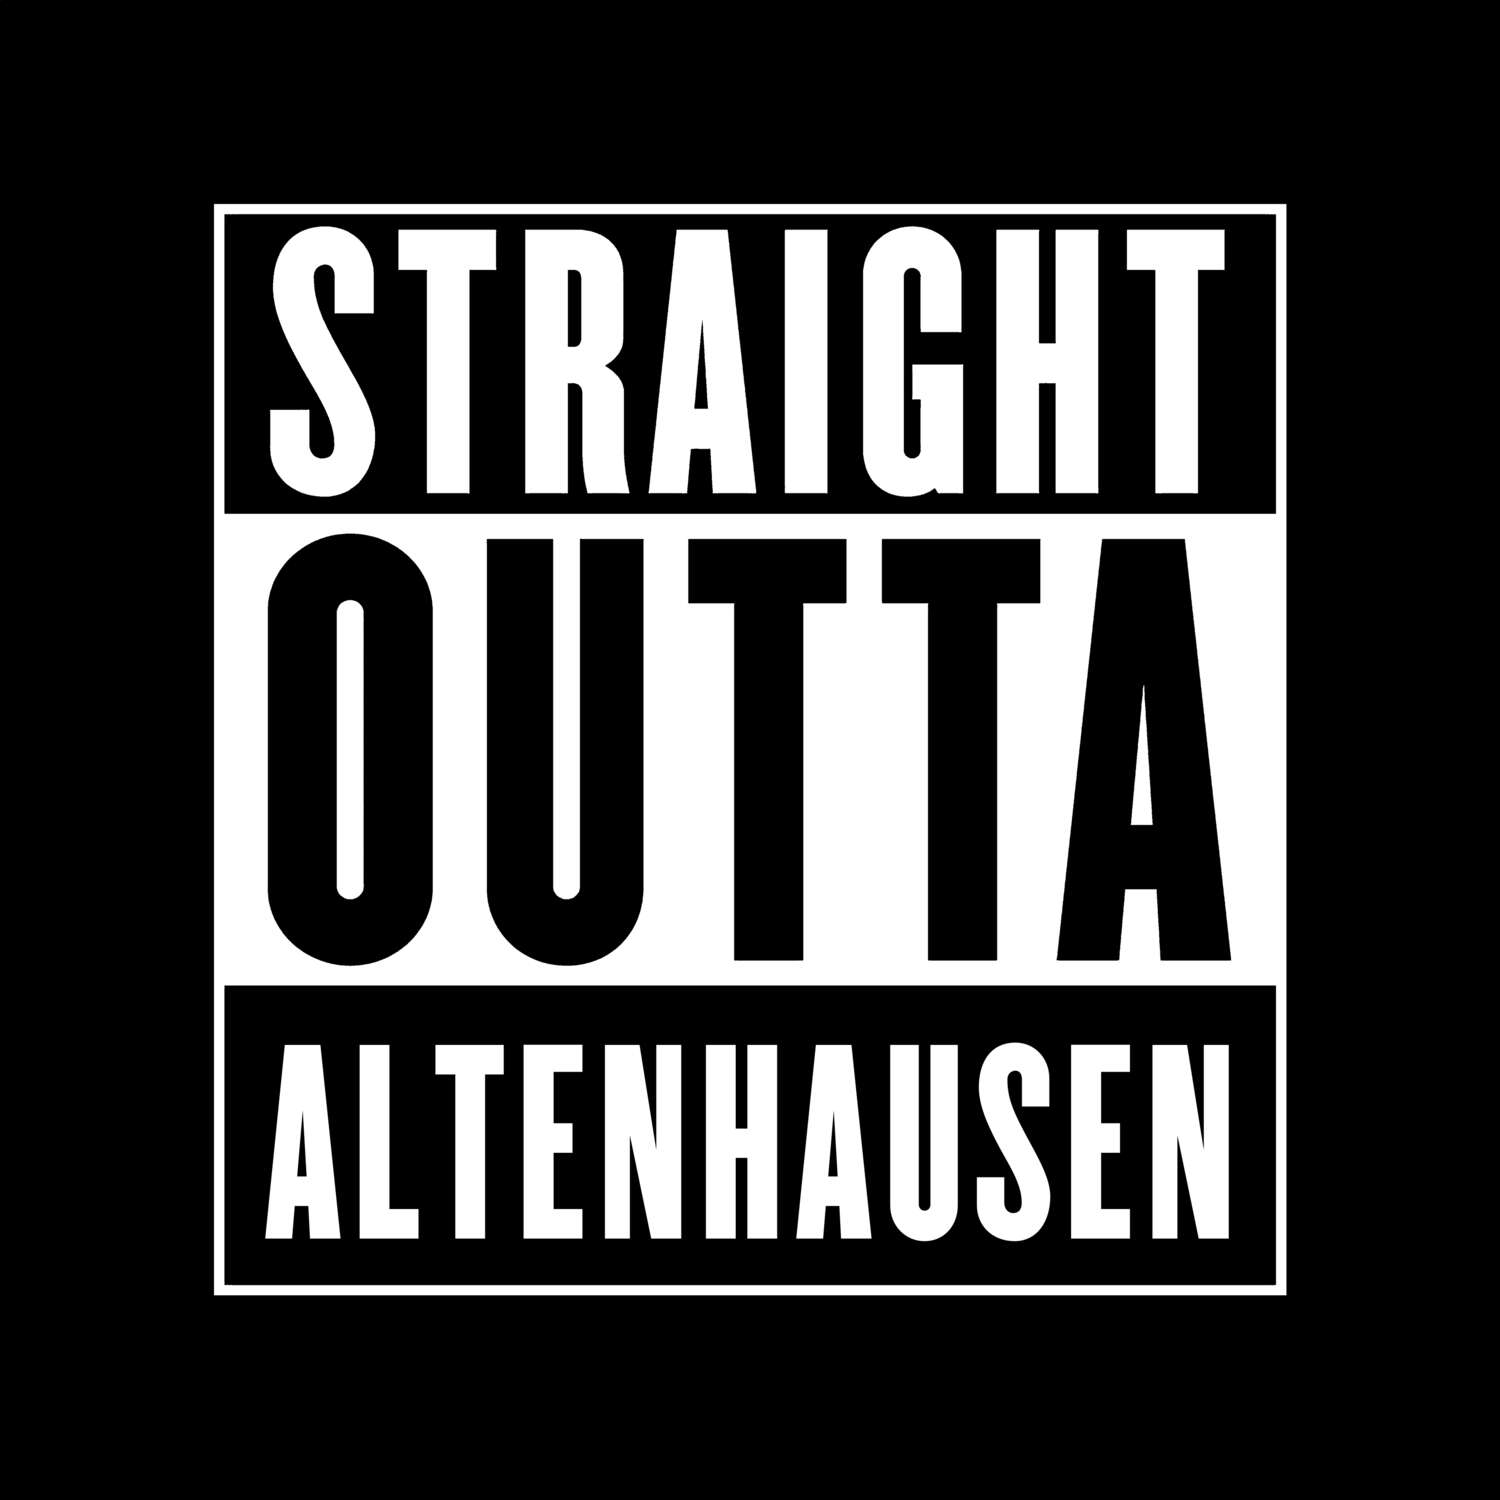 Altenhausen T-Shirt »Straight Outta«